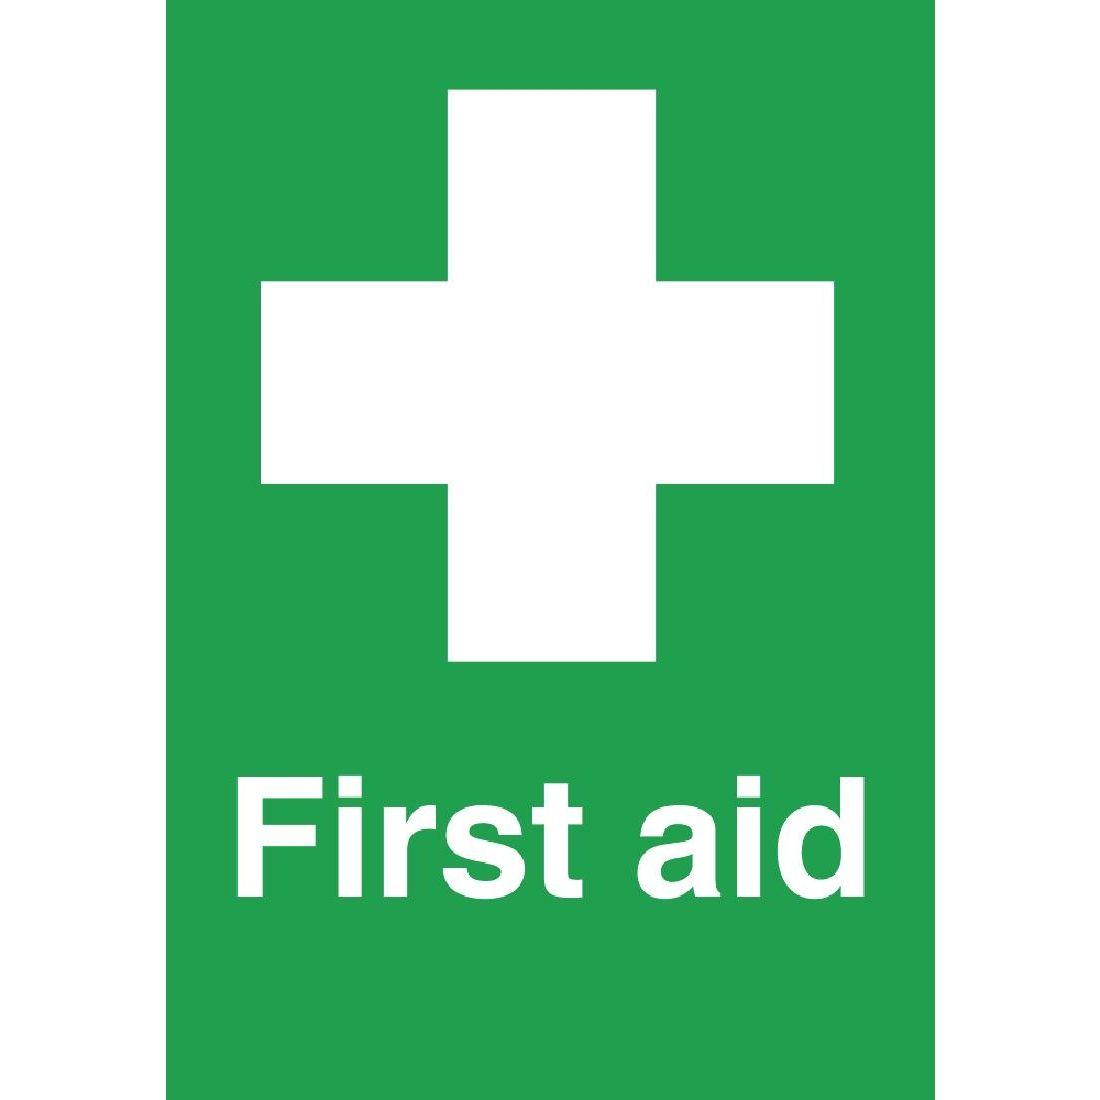 First Aid Logo - First Aid Symbol Sign